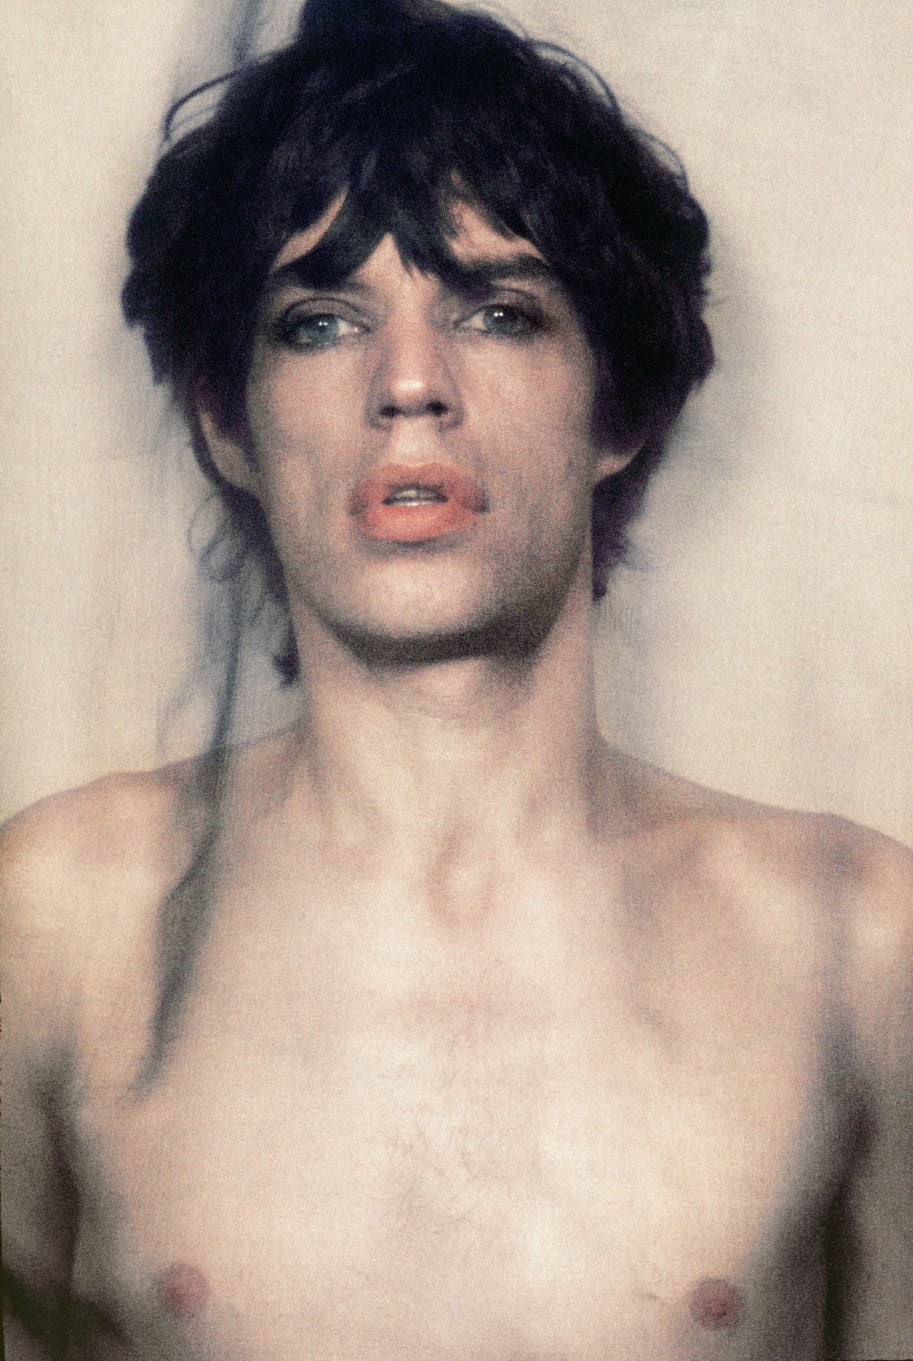 David Bailey Portrait Photograph - Mick Jagger